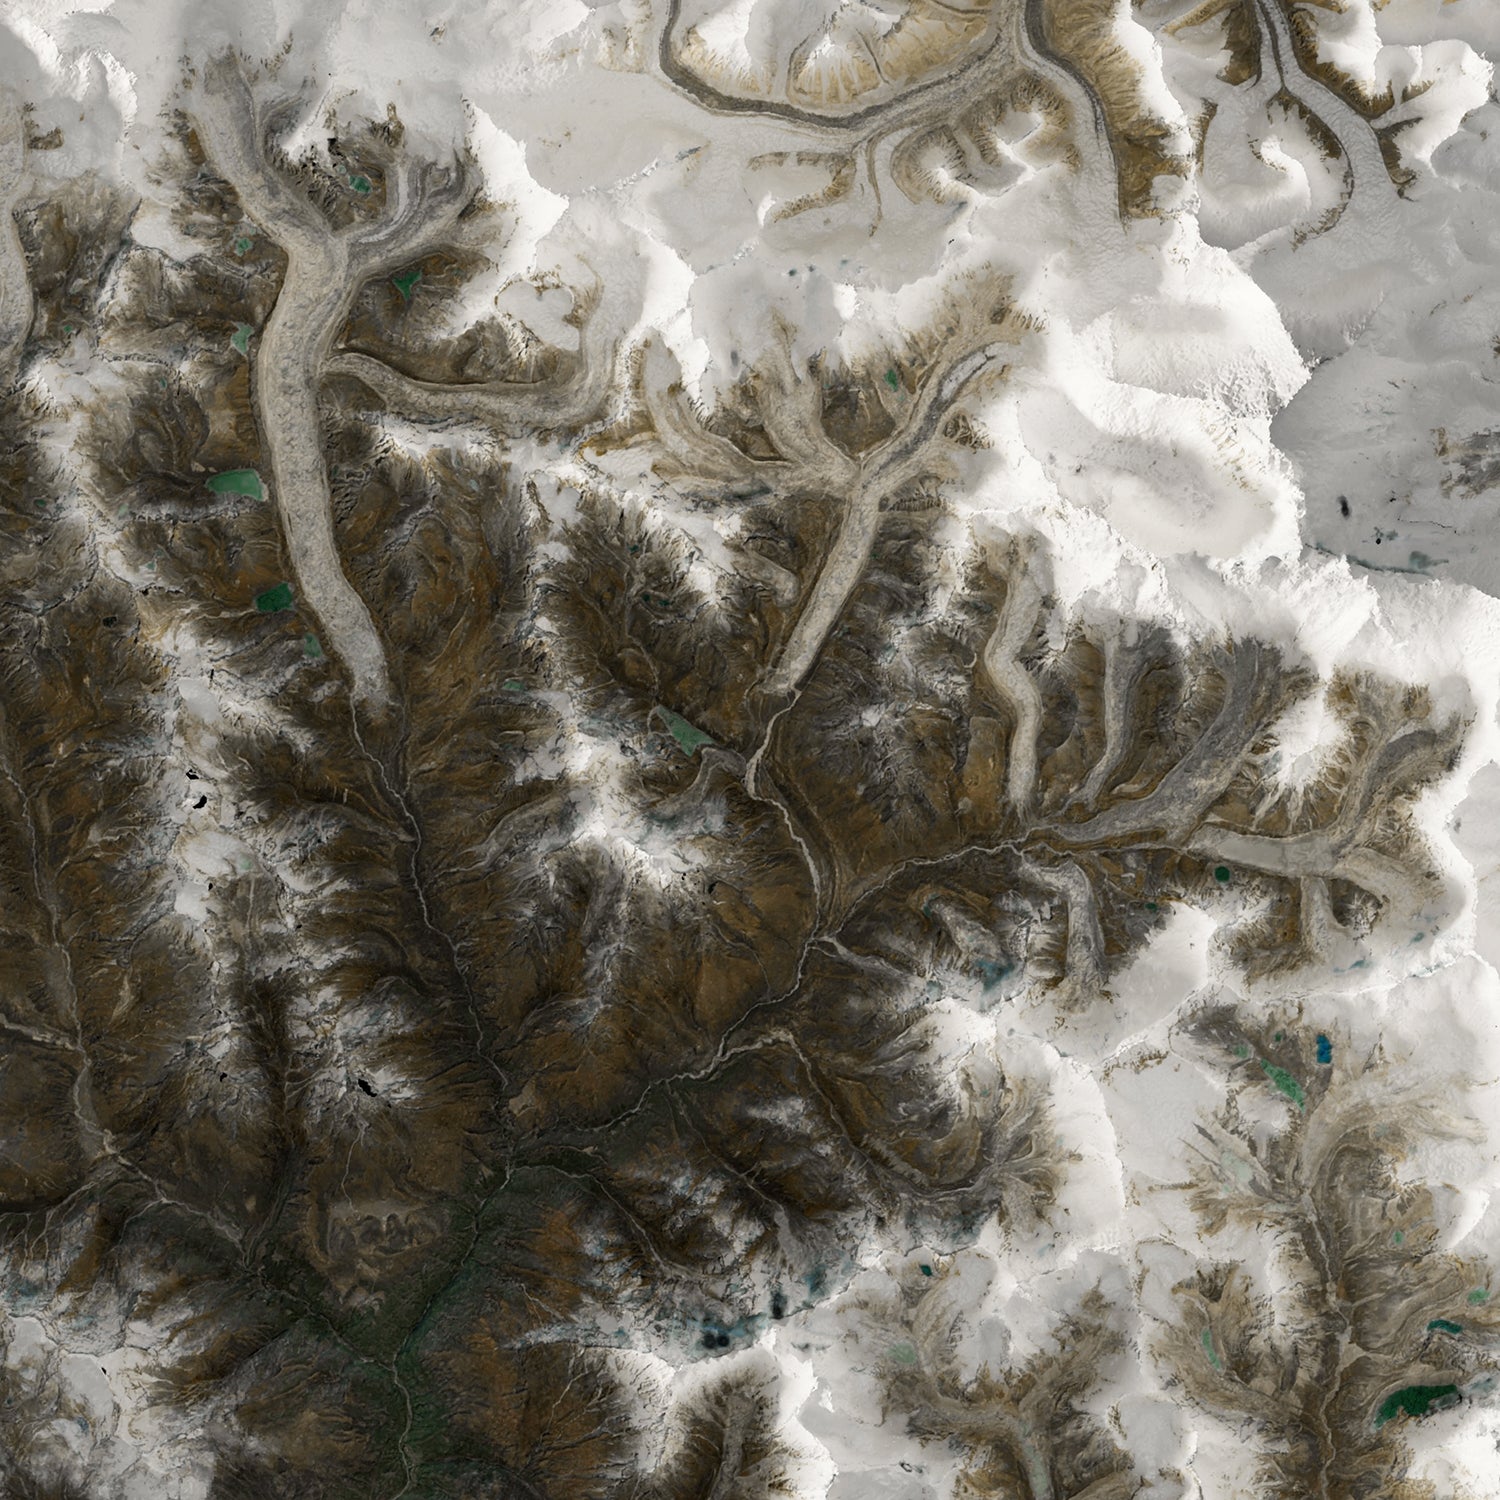 Mount Everest Region - Satellite Imagery